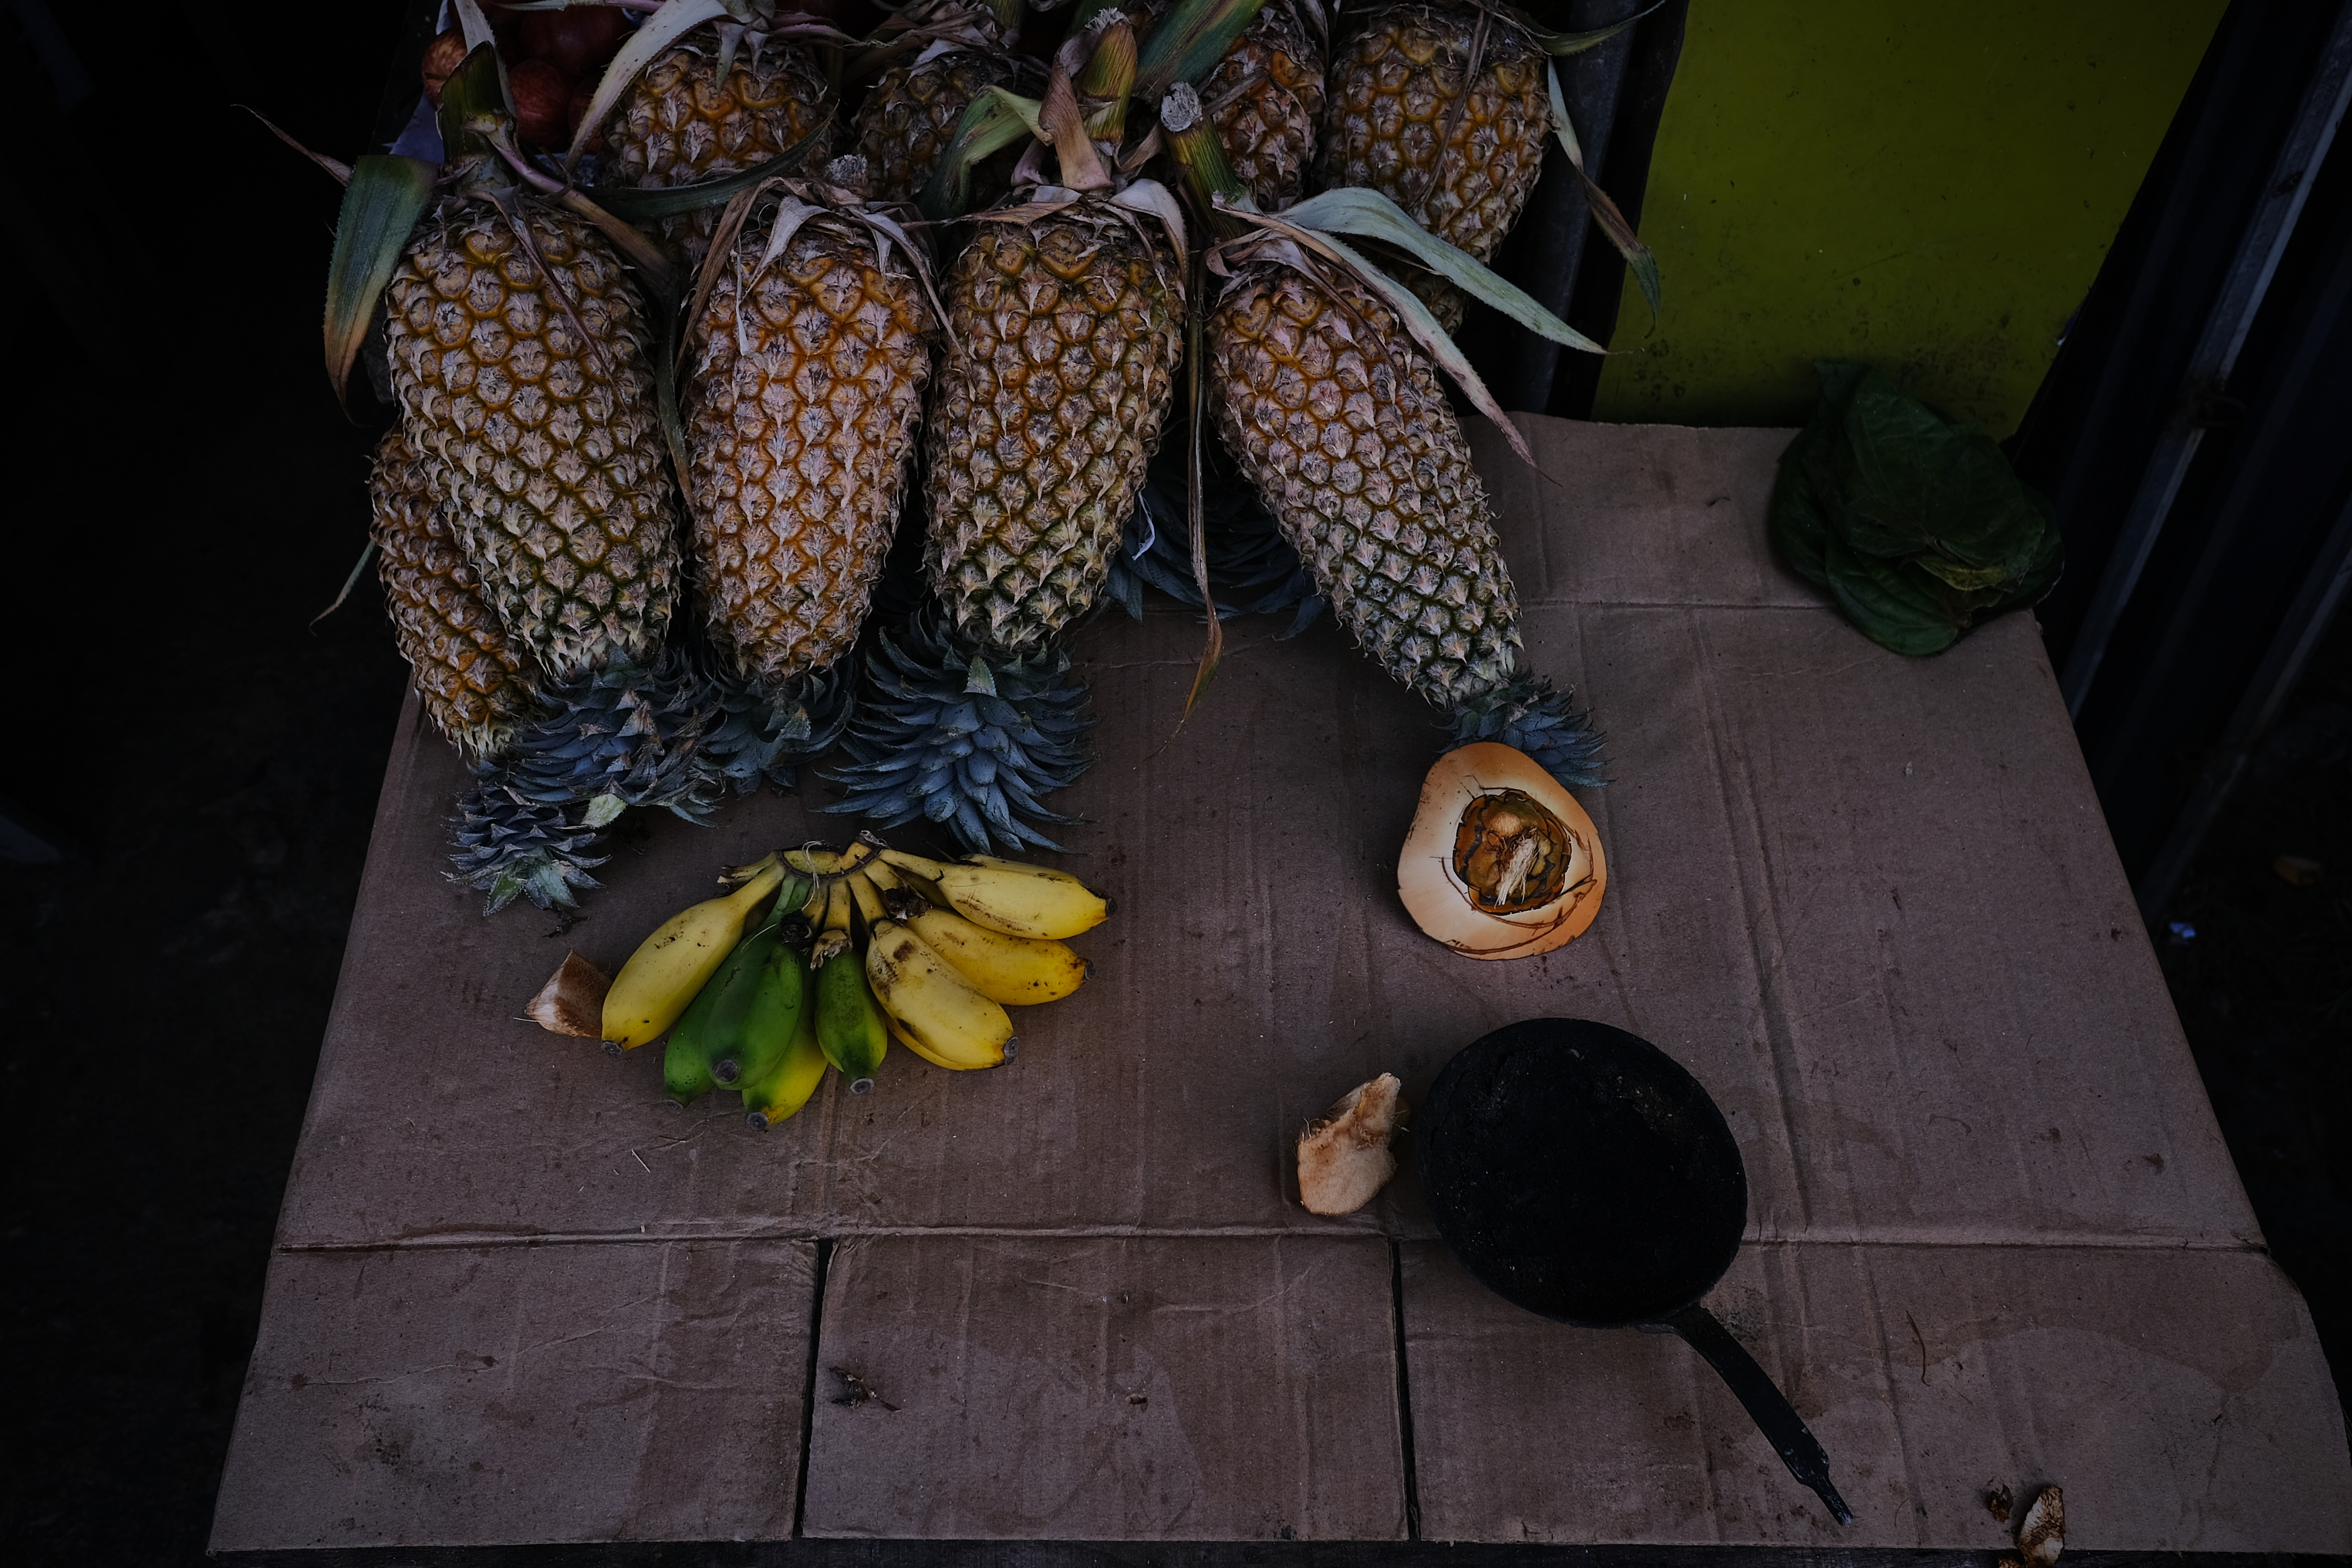 Sri Lanka, Weligama, 2021-10-02. Pineapples in the city. Photograph by Noemie de Bellaigue / Hans Lucas. 
Sri Lanka, Weligama, 2021-10-02. Des ananas dans la ville. Photographie par Noemie de Bellaigue / Hans Lucas.